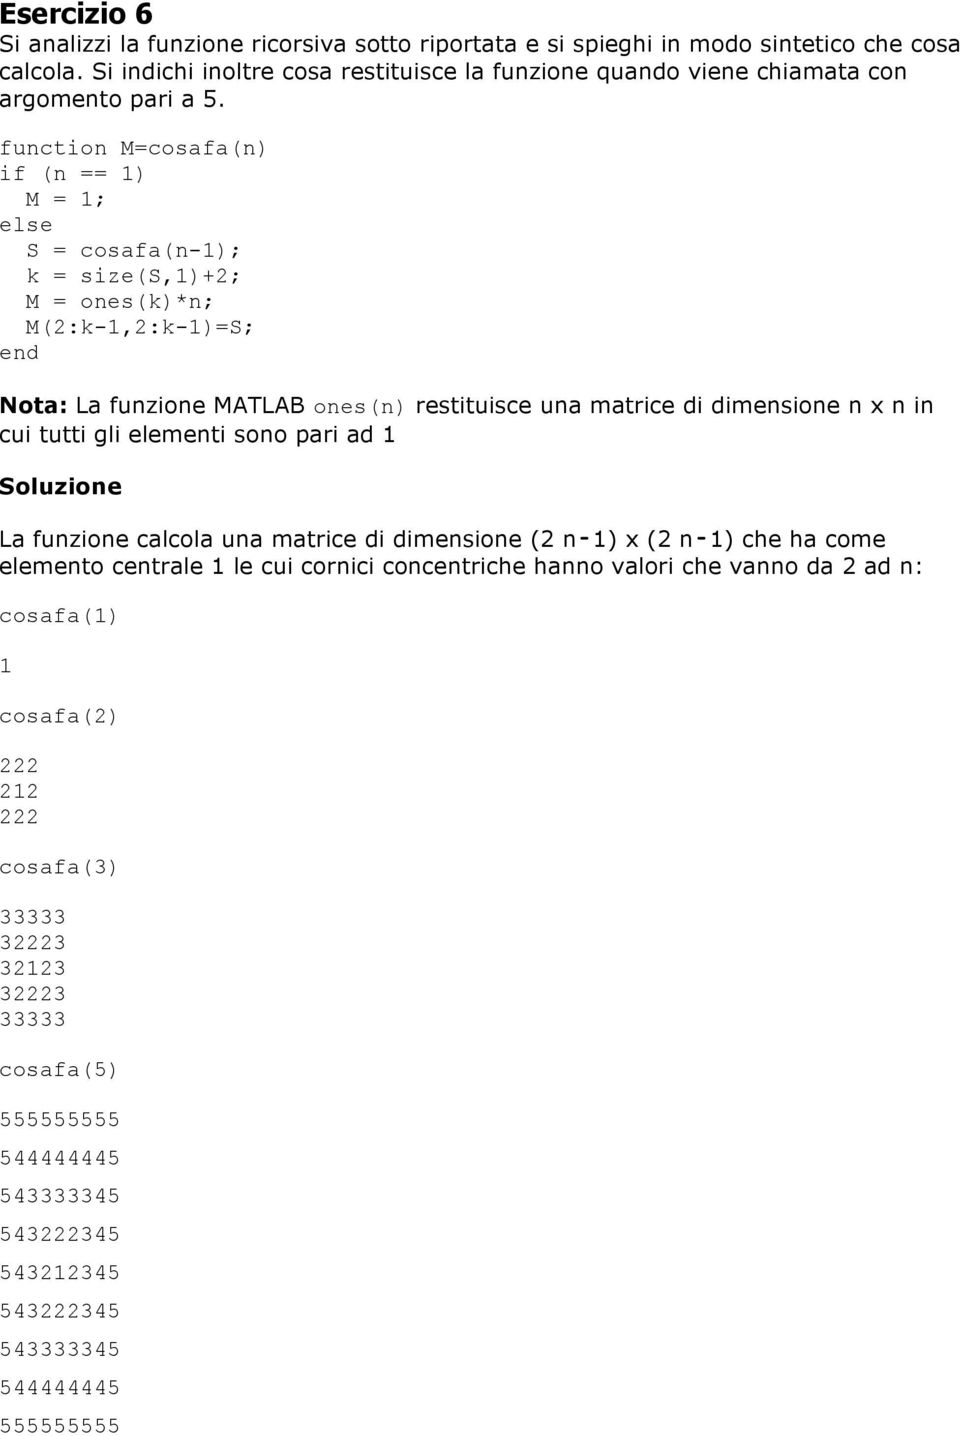 function M=cosafa(n) if (n == 1) M = 1; else S = cosafa(n-1); k = size(s,1)+2; M = ones(k)*n; M(2:k-1,2:k-1)=S; Nota: La funzione MATLAB ones(n) restituisce una matrice di dimensione n x n in